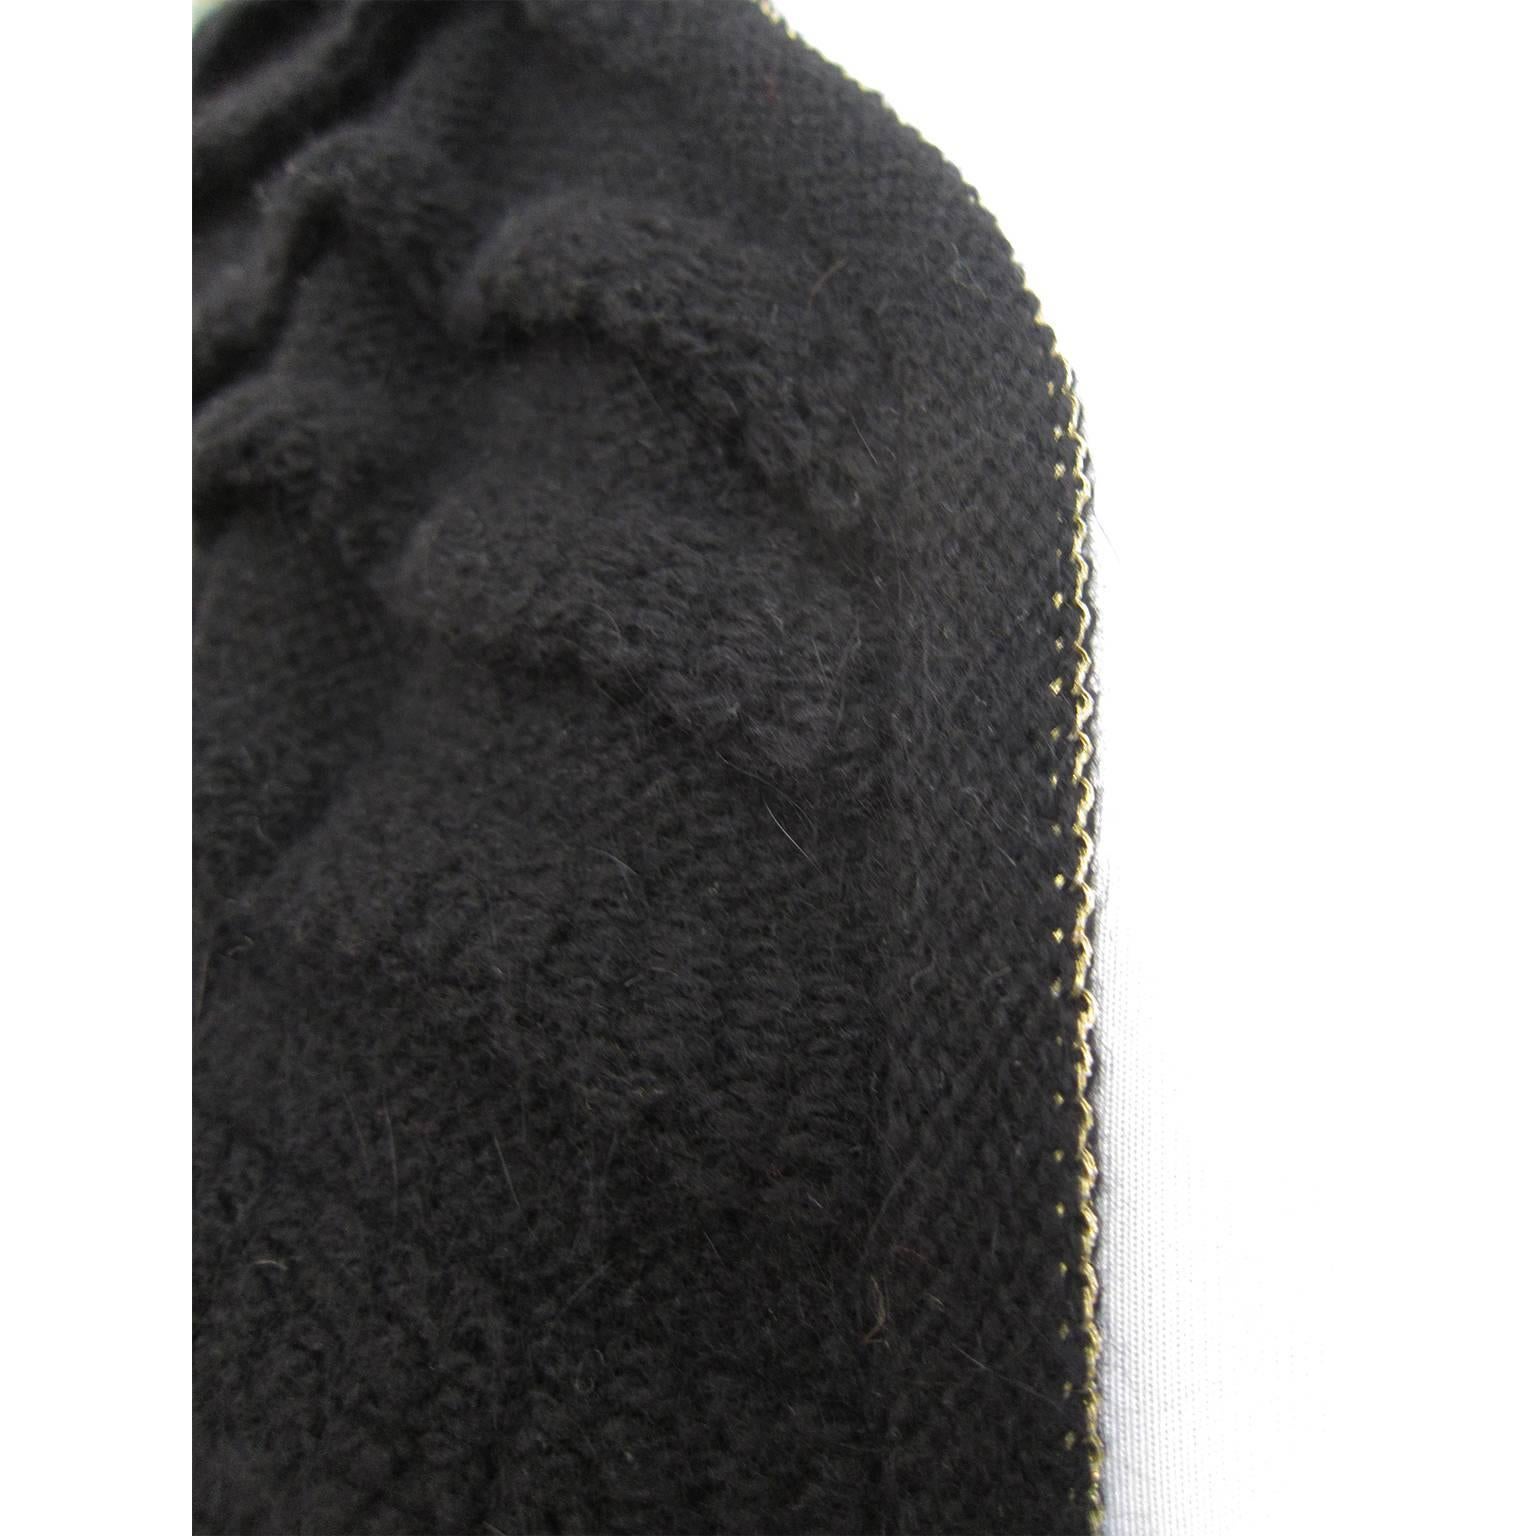 Issey Miyake Black Pleated Cardigan Jacket 1980s 2